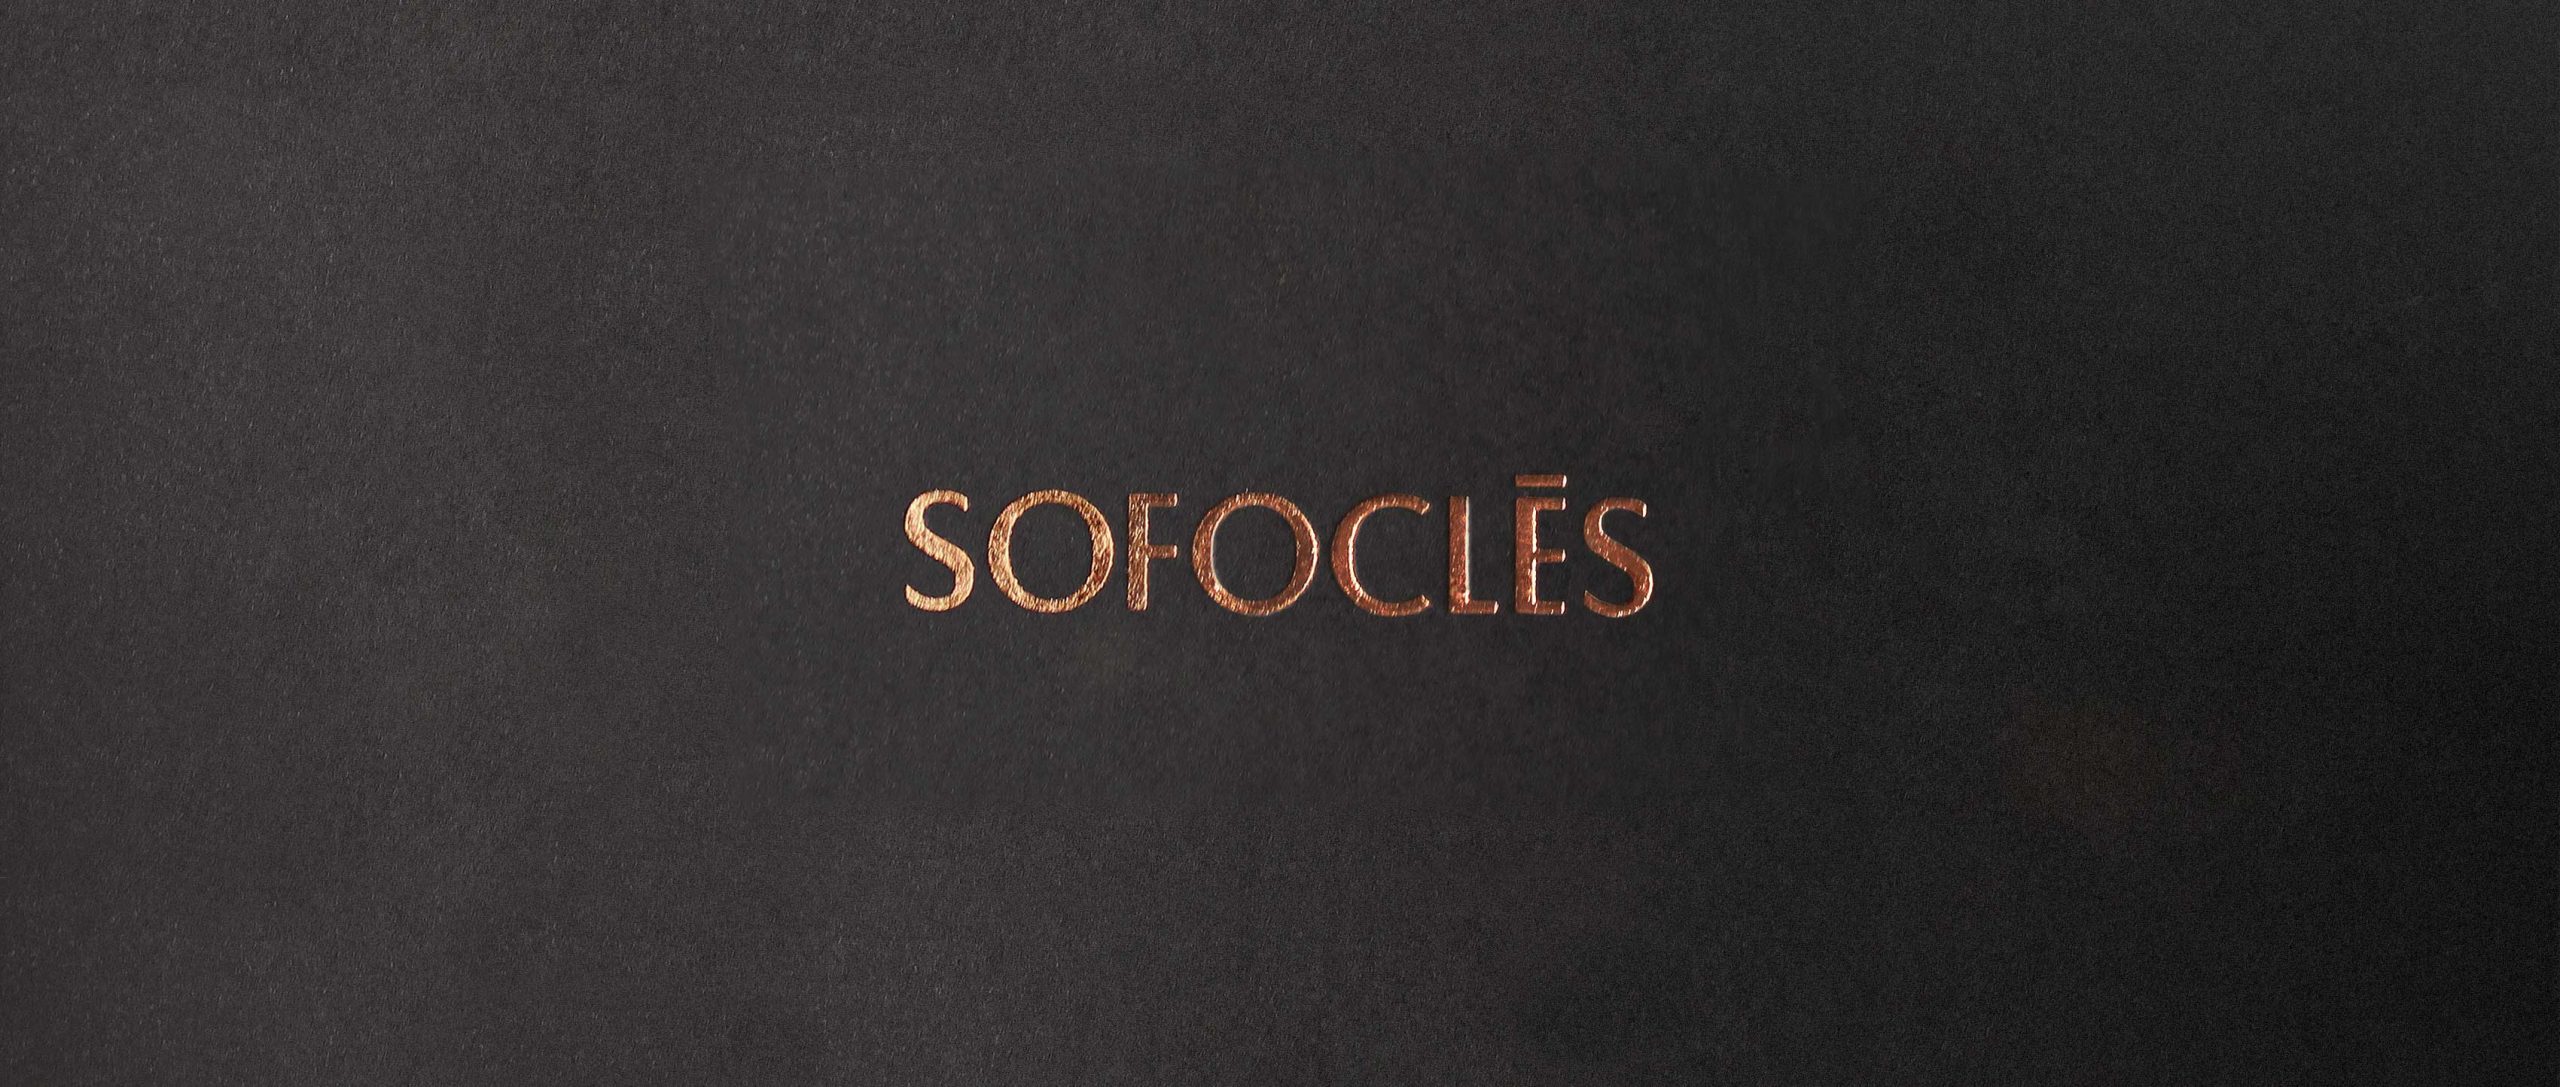 sofocles logotype foil